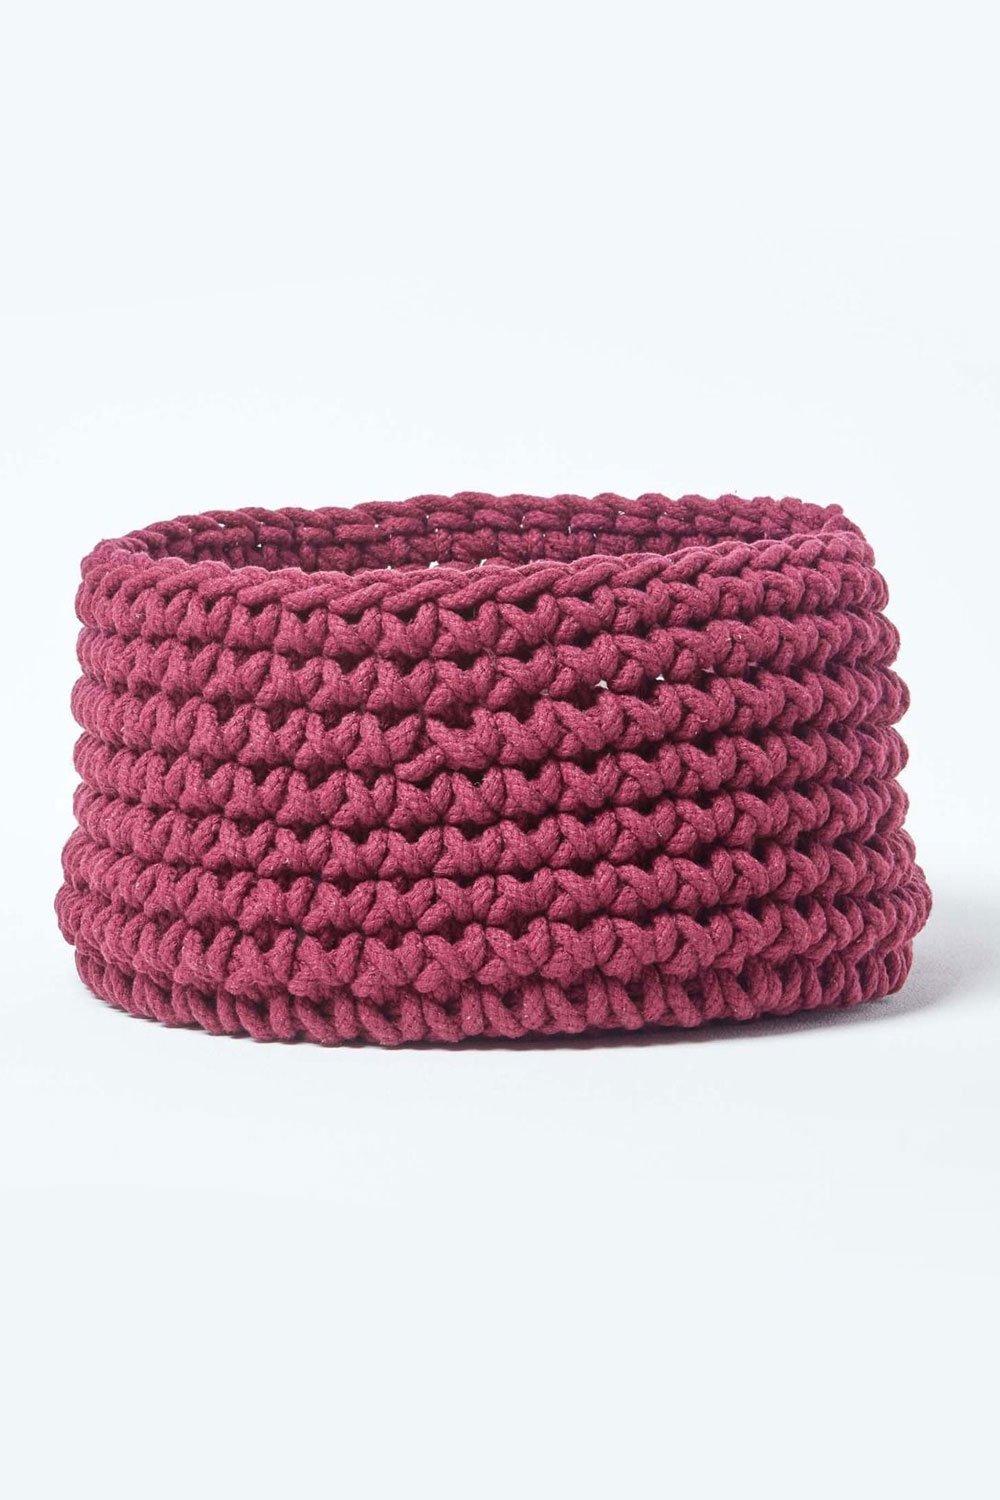 Homescapes Cotton Knitted Round Storage Basket, 37 x 21 cm|plum